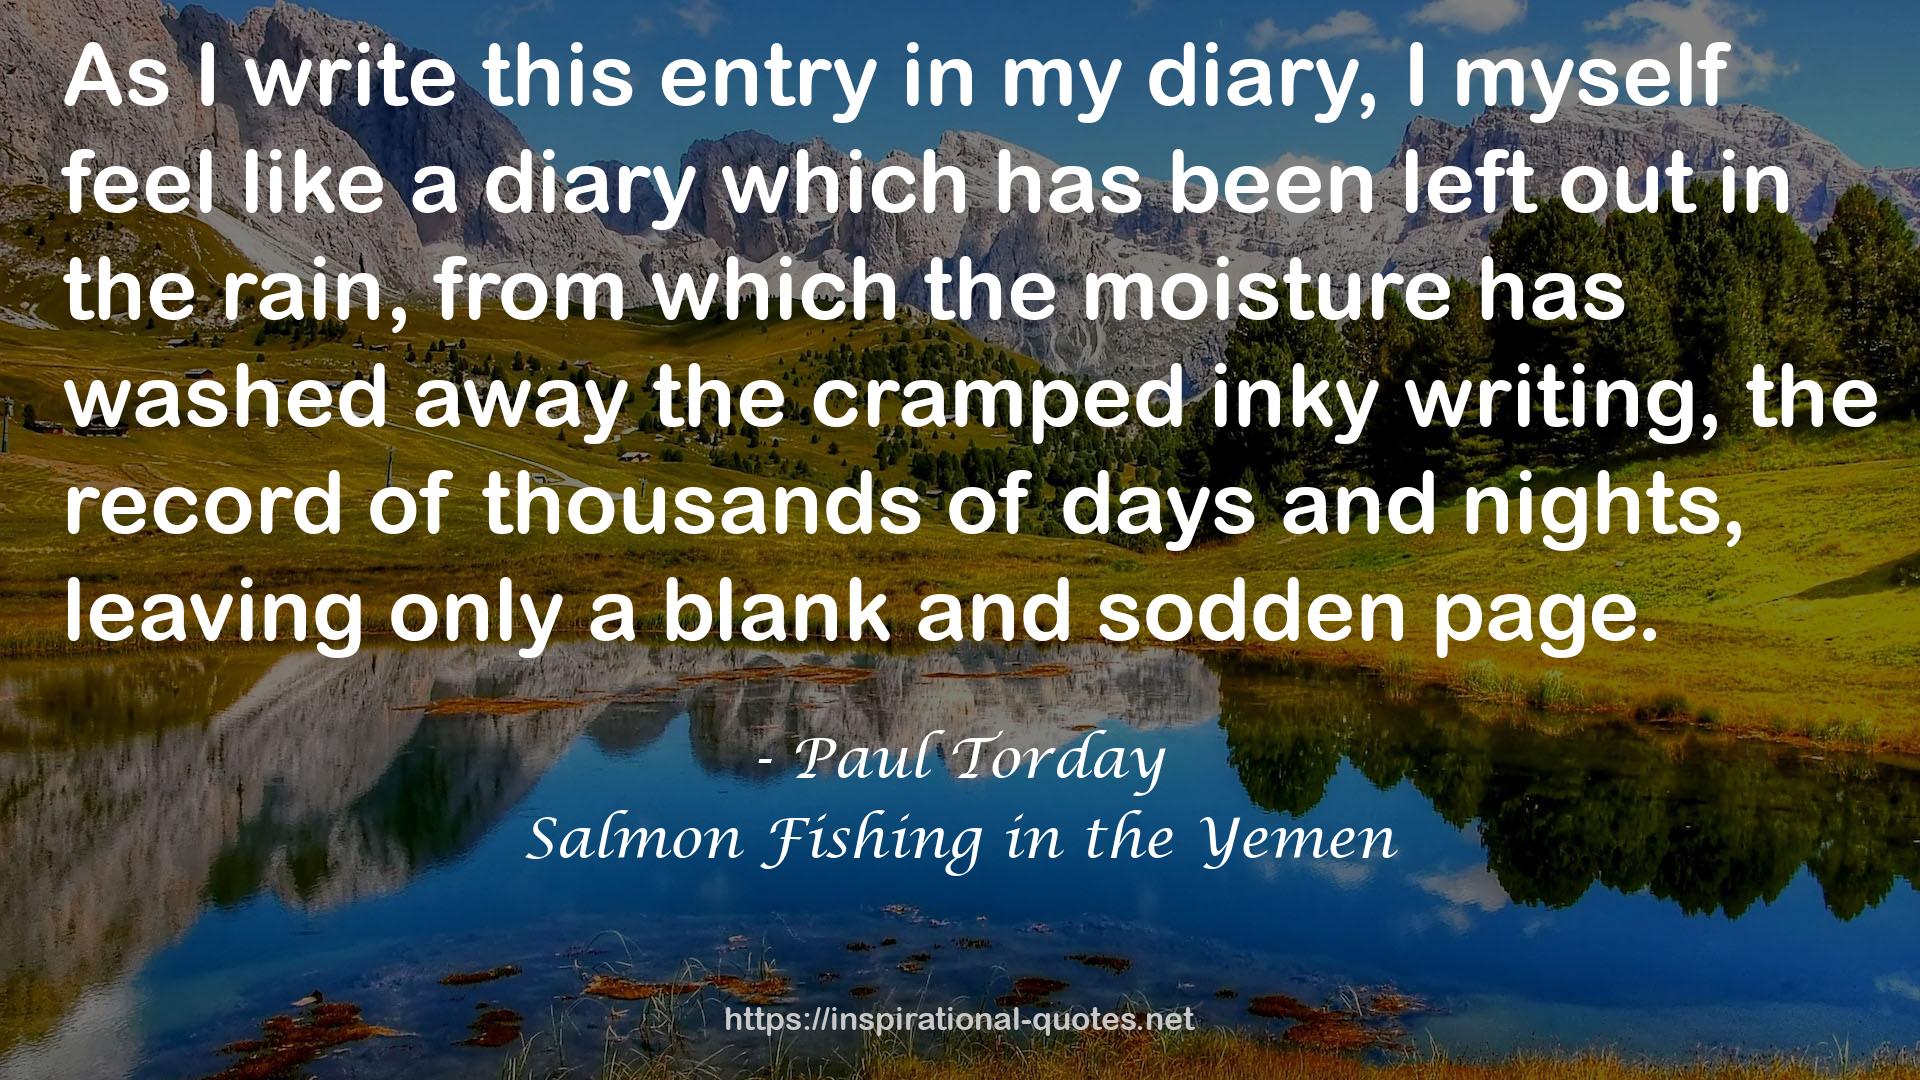 Salmon Fishing in the Yemen QUOTES